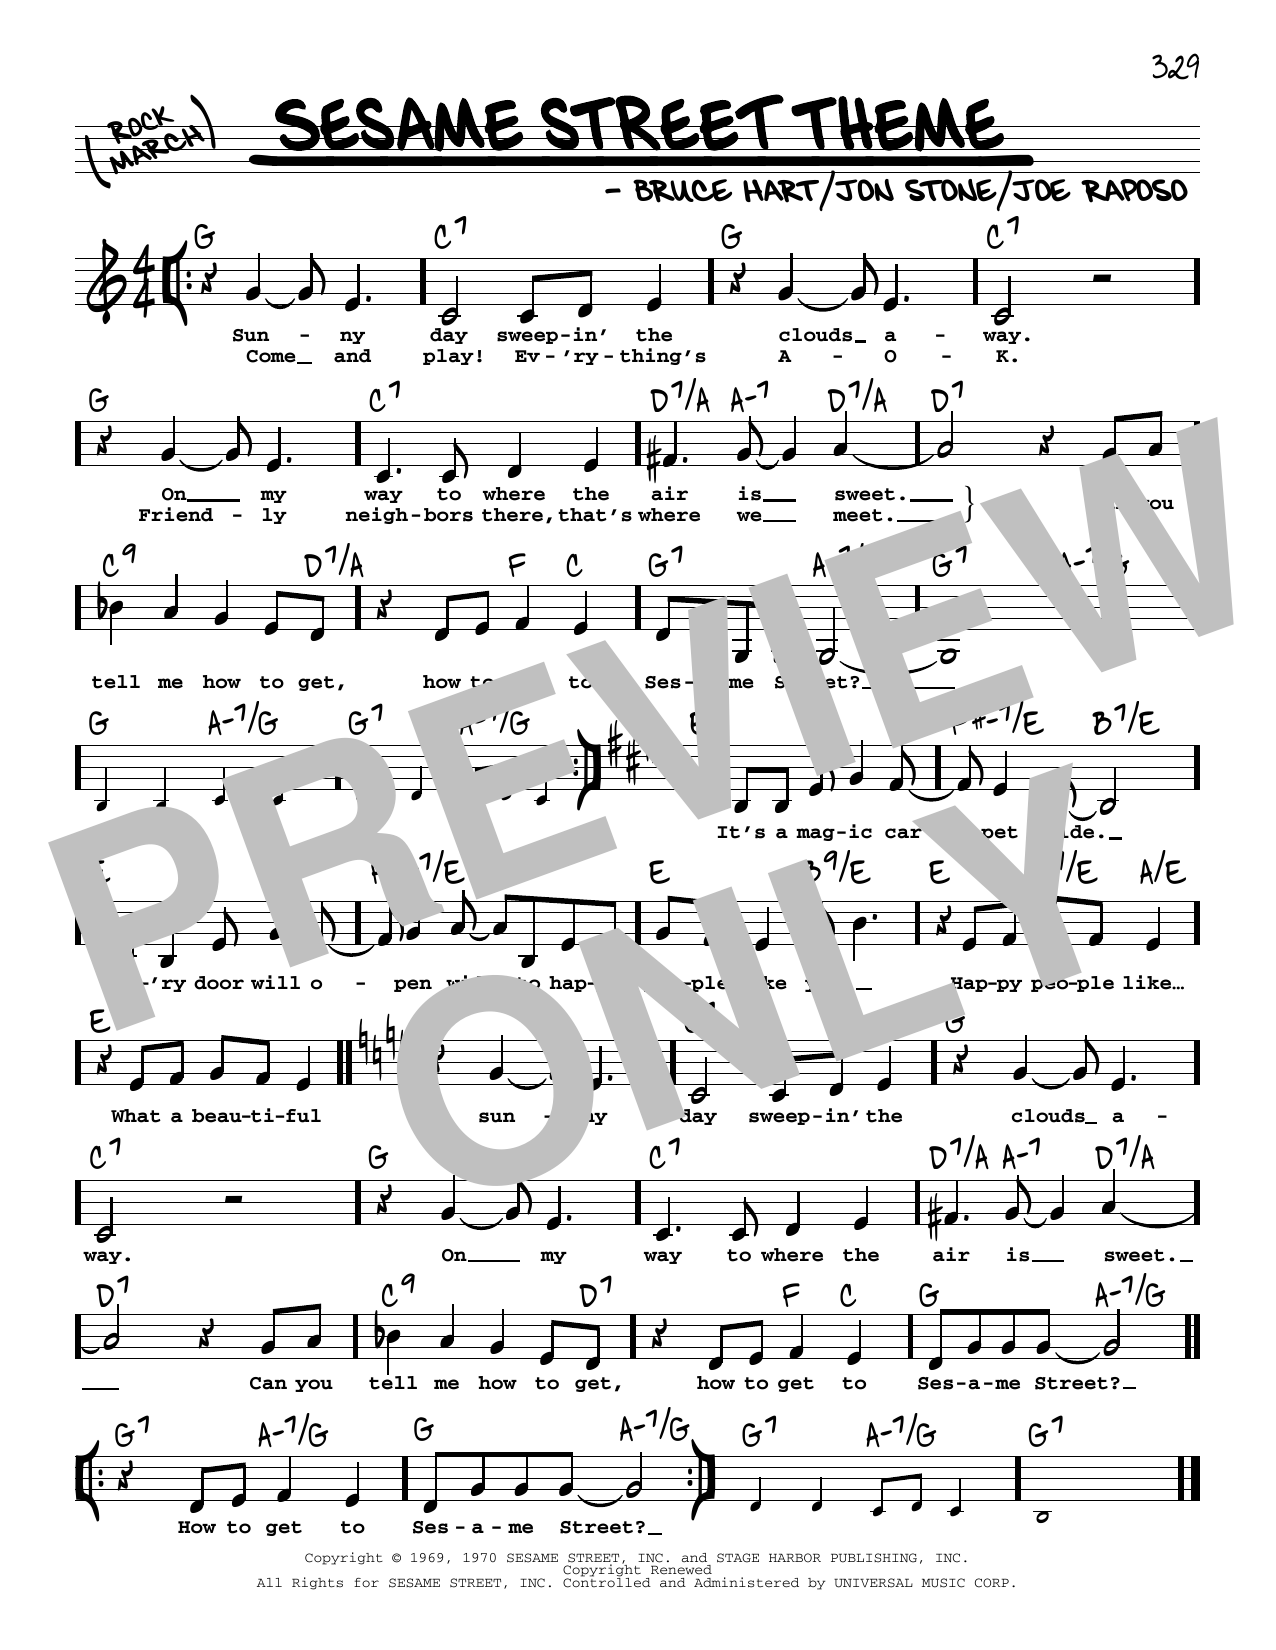 Joe Raposo Sesame Street Theme (Low Voice) Sheet Music Notes & Chords for Real Book – Melody, Lyrics & Chords - Download or Print PDF